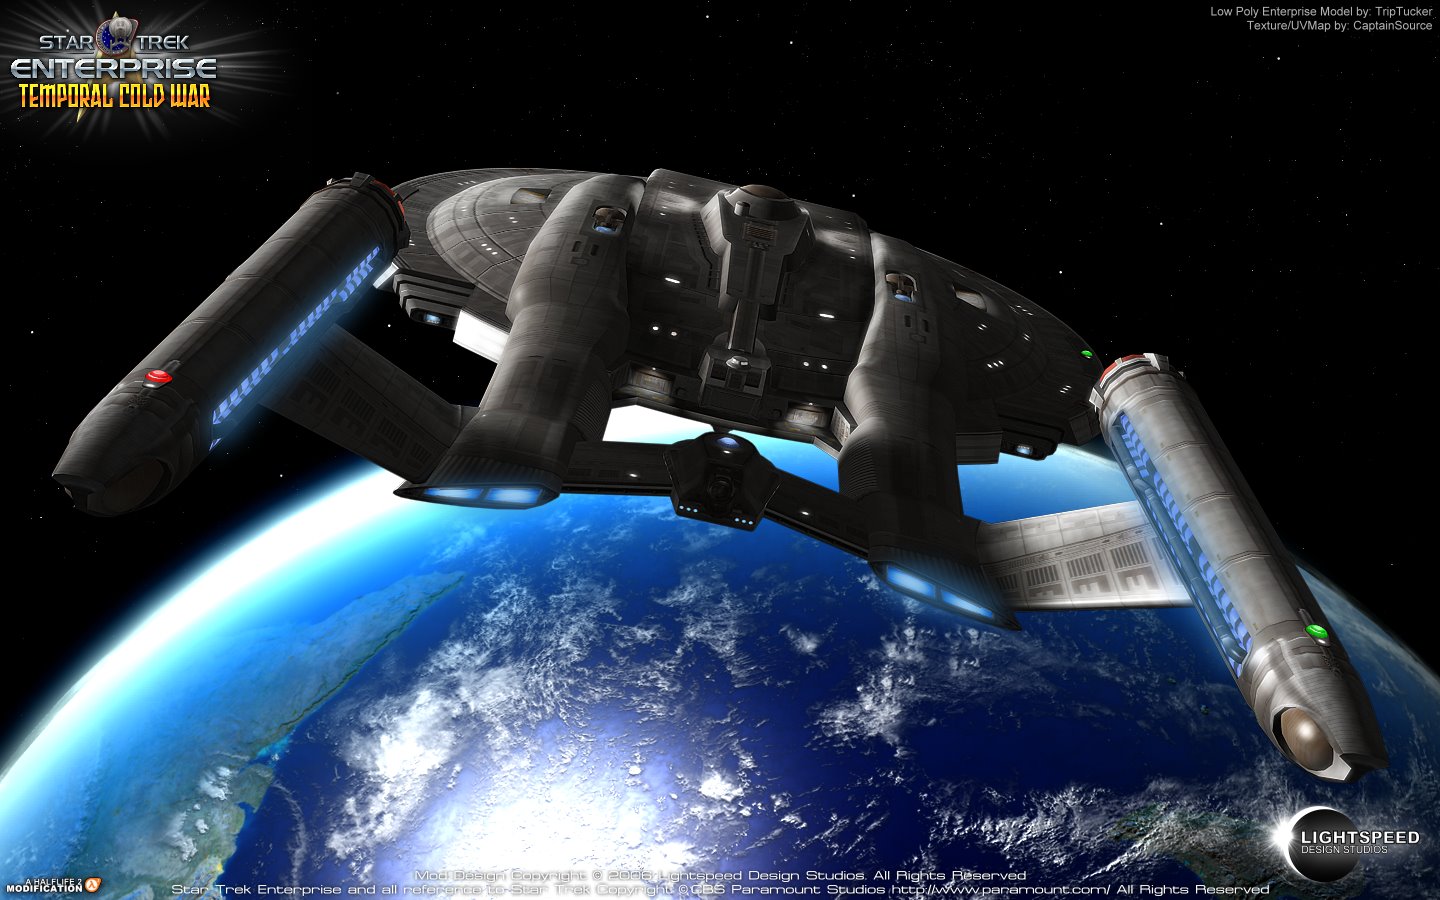 It's Been A Long Road image - Star Trek: Enterprise - TCW Mod for Half-Life 